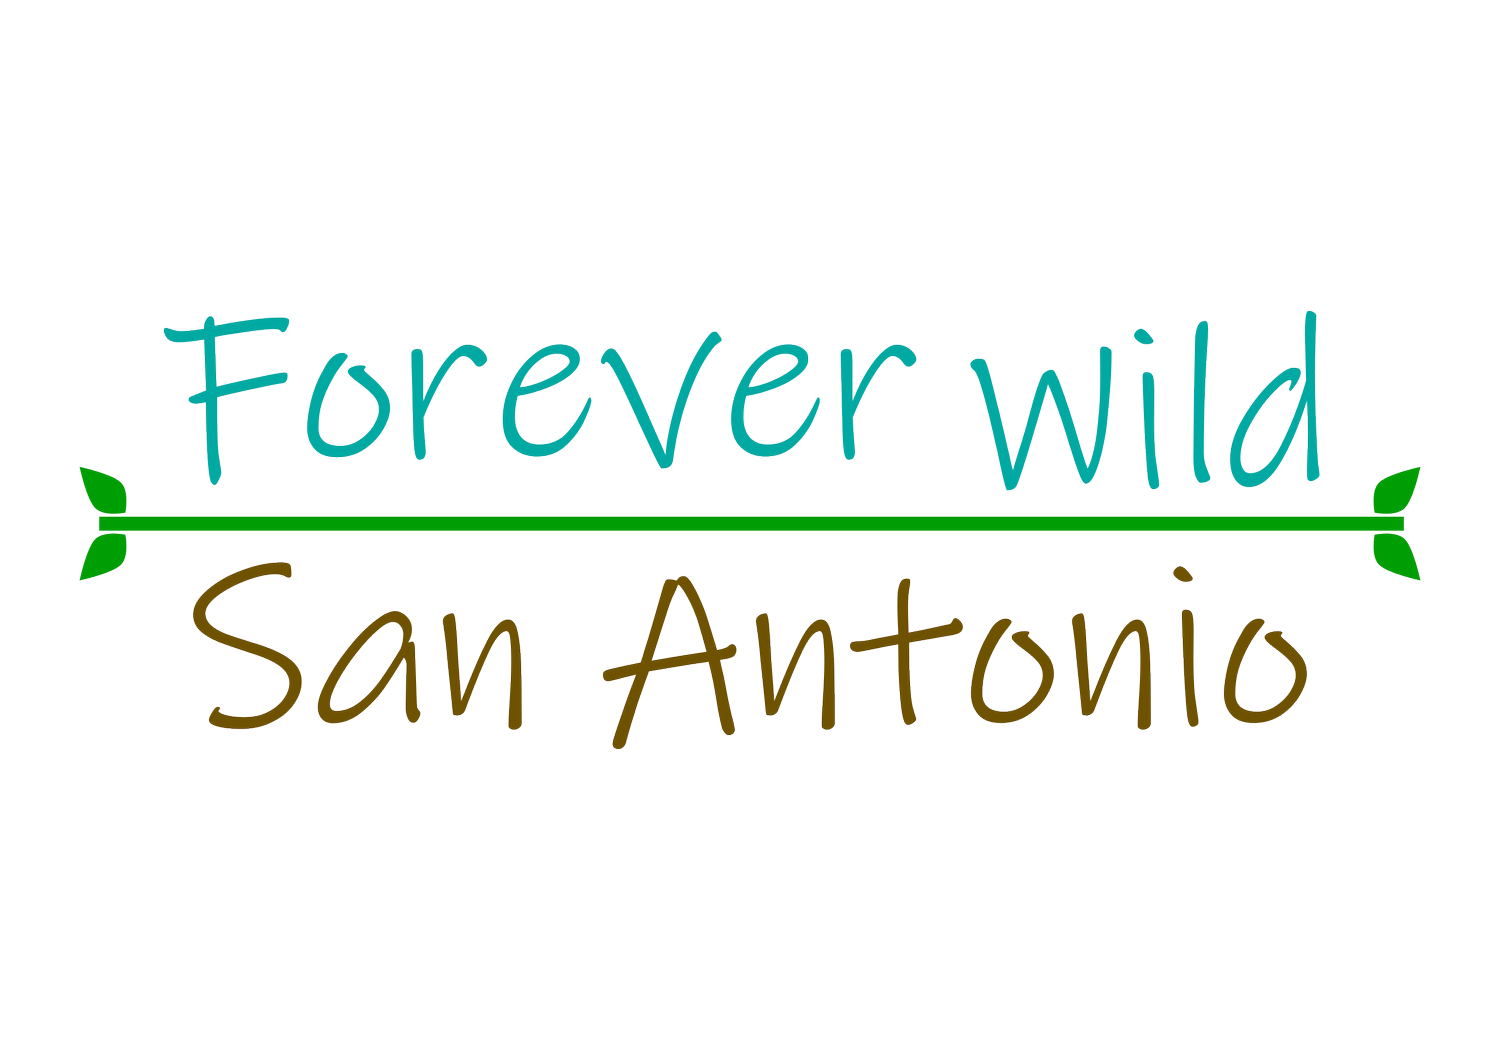 Forever Wild San Antonio